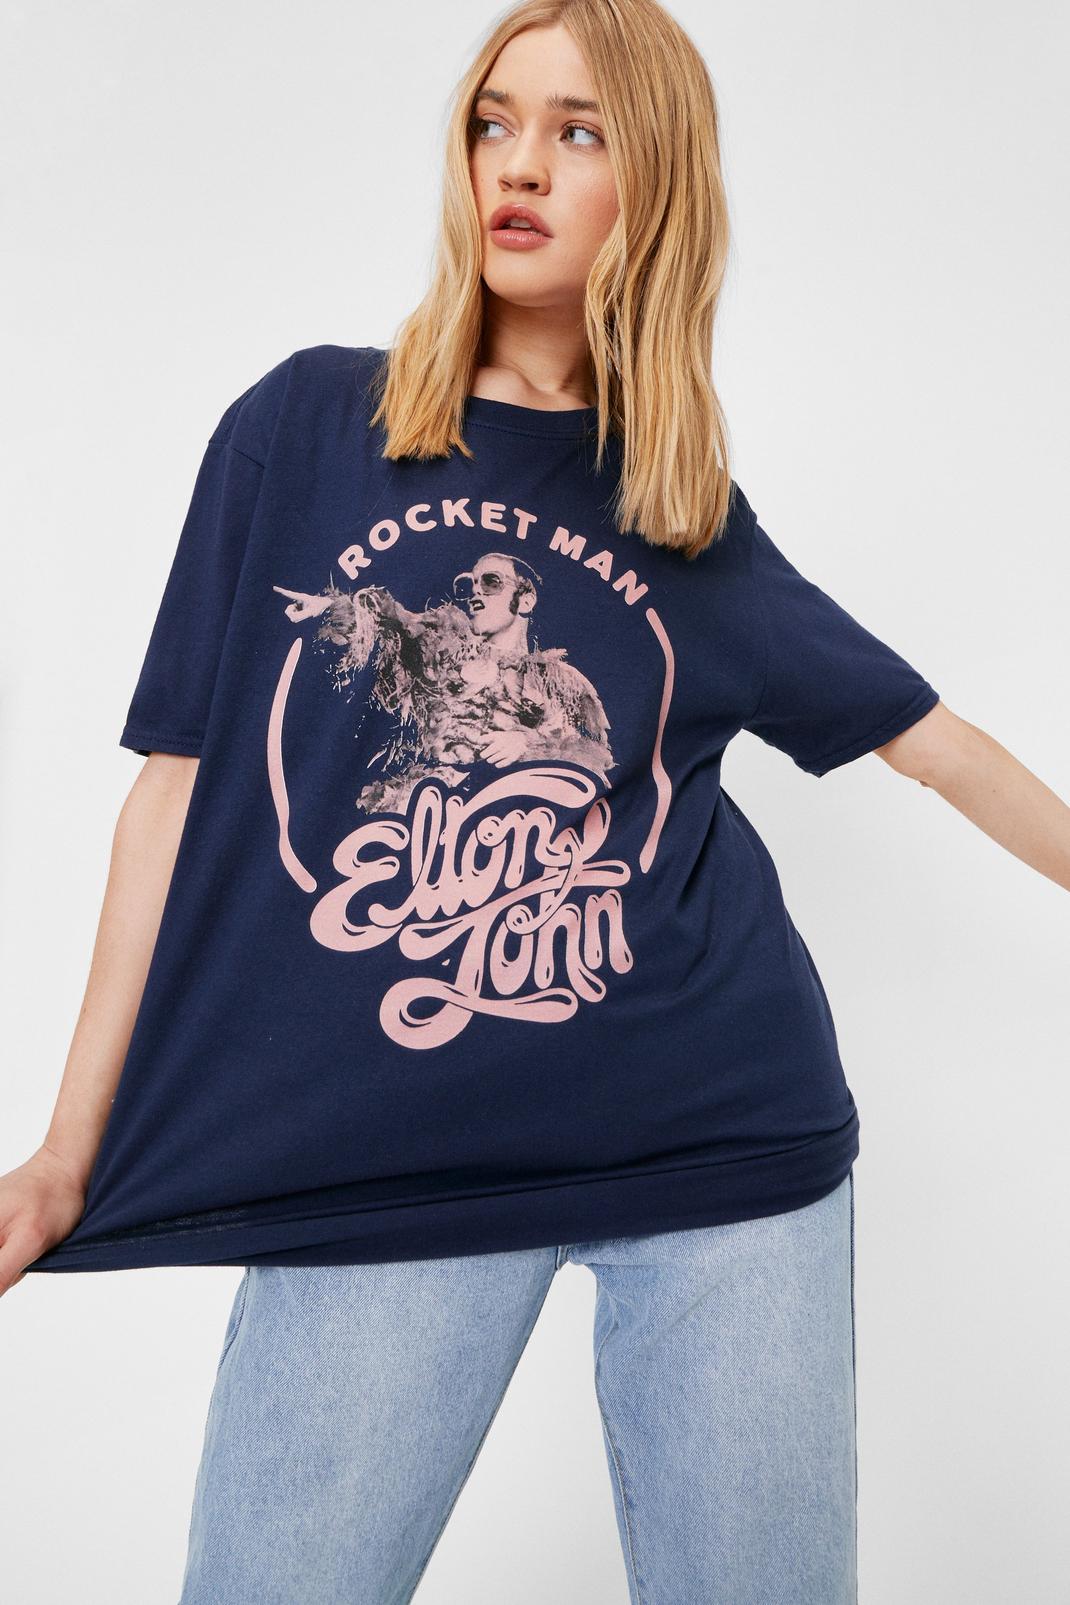 Elton John Rocket Man Oversized Graphic Band T-Shirt, Navy image number 1